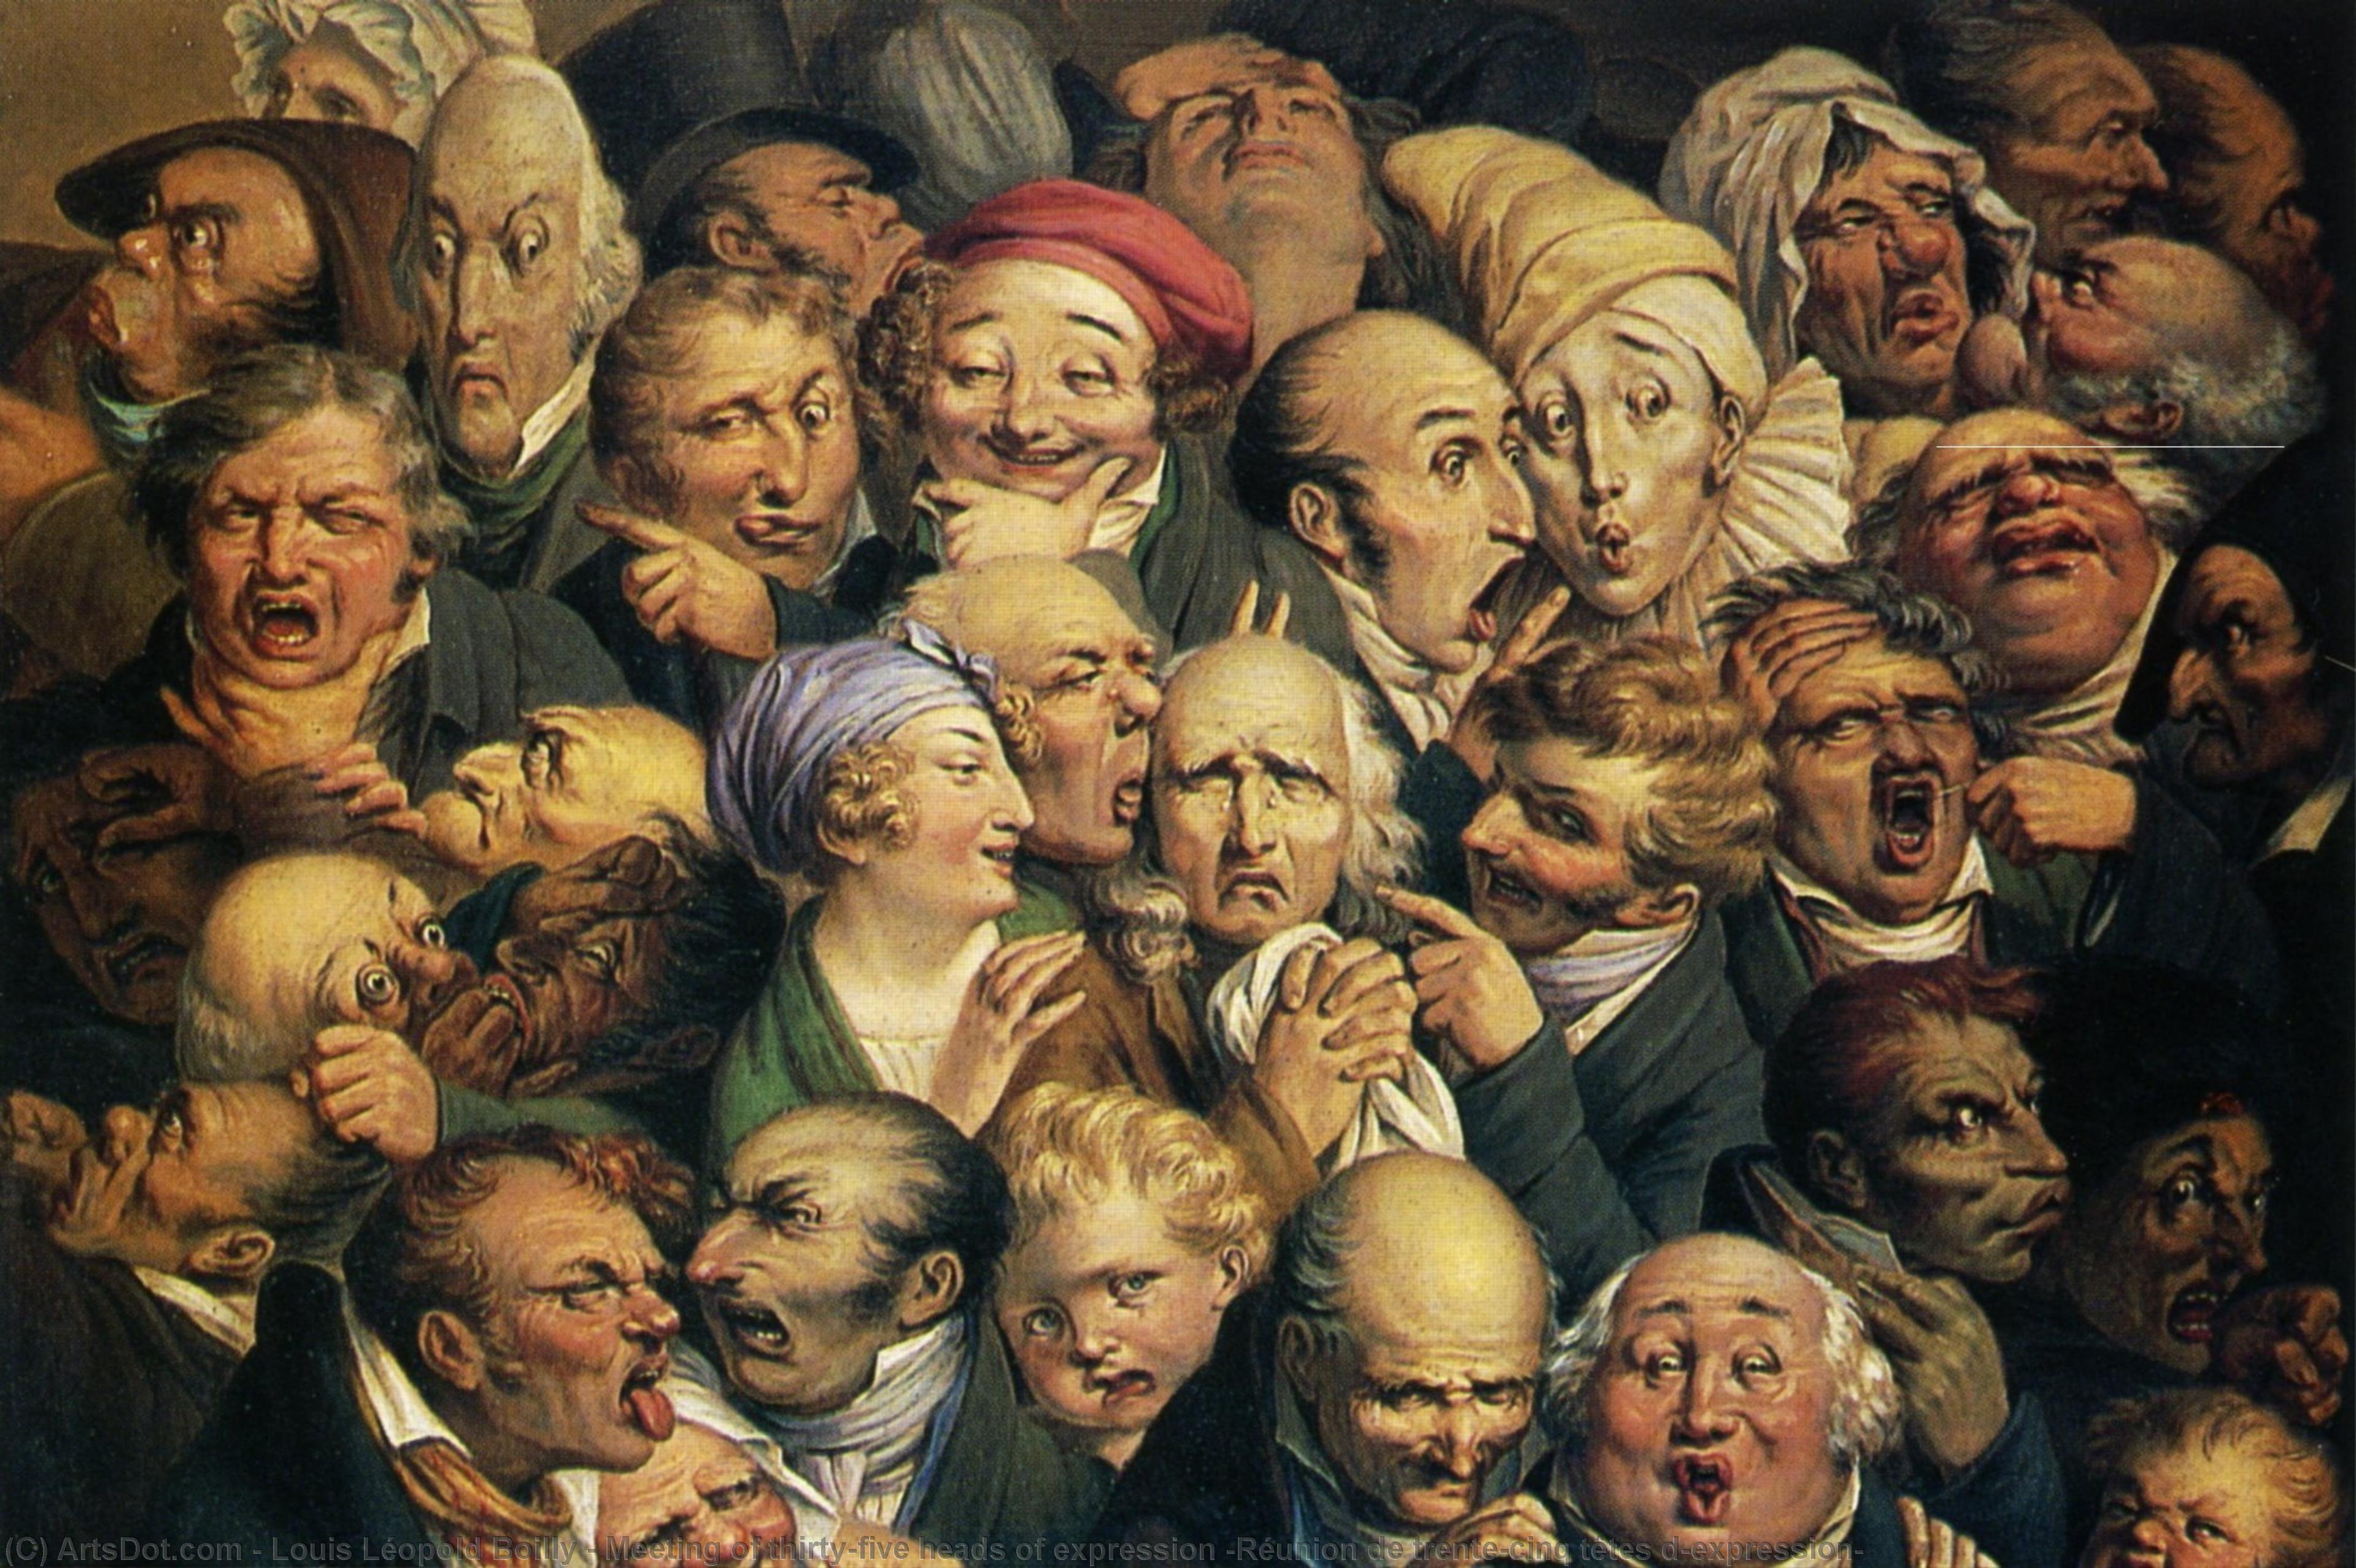 Wikioo.org - Encyklopedia Sztuk Pięknych - Malarstwo, Grafika Louis Léopold Boilly - Meeting of thirty-five heads of expression (Réunion de trente-cinq têtes d'expression)